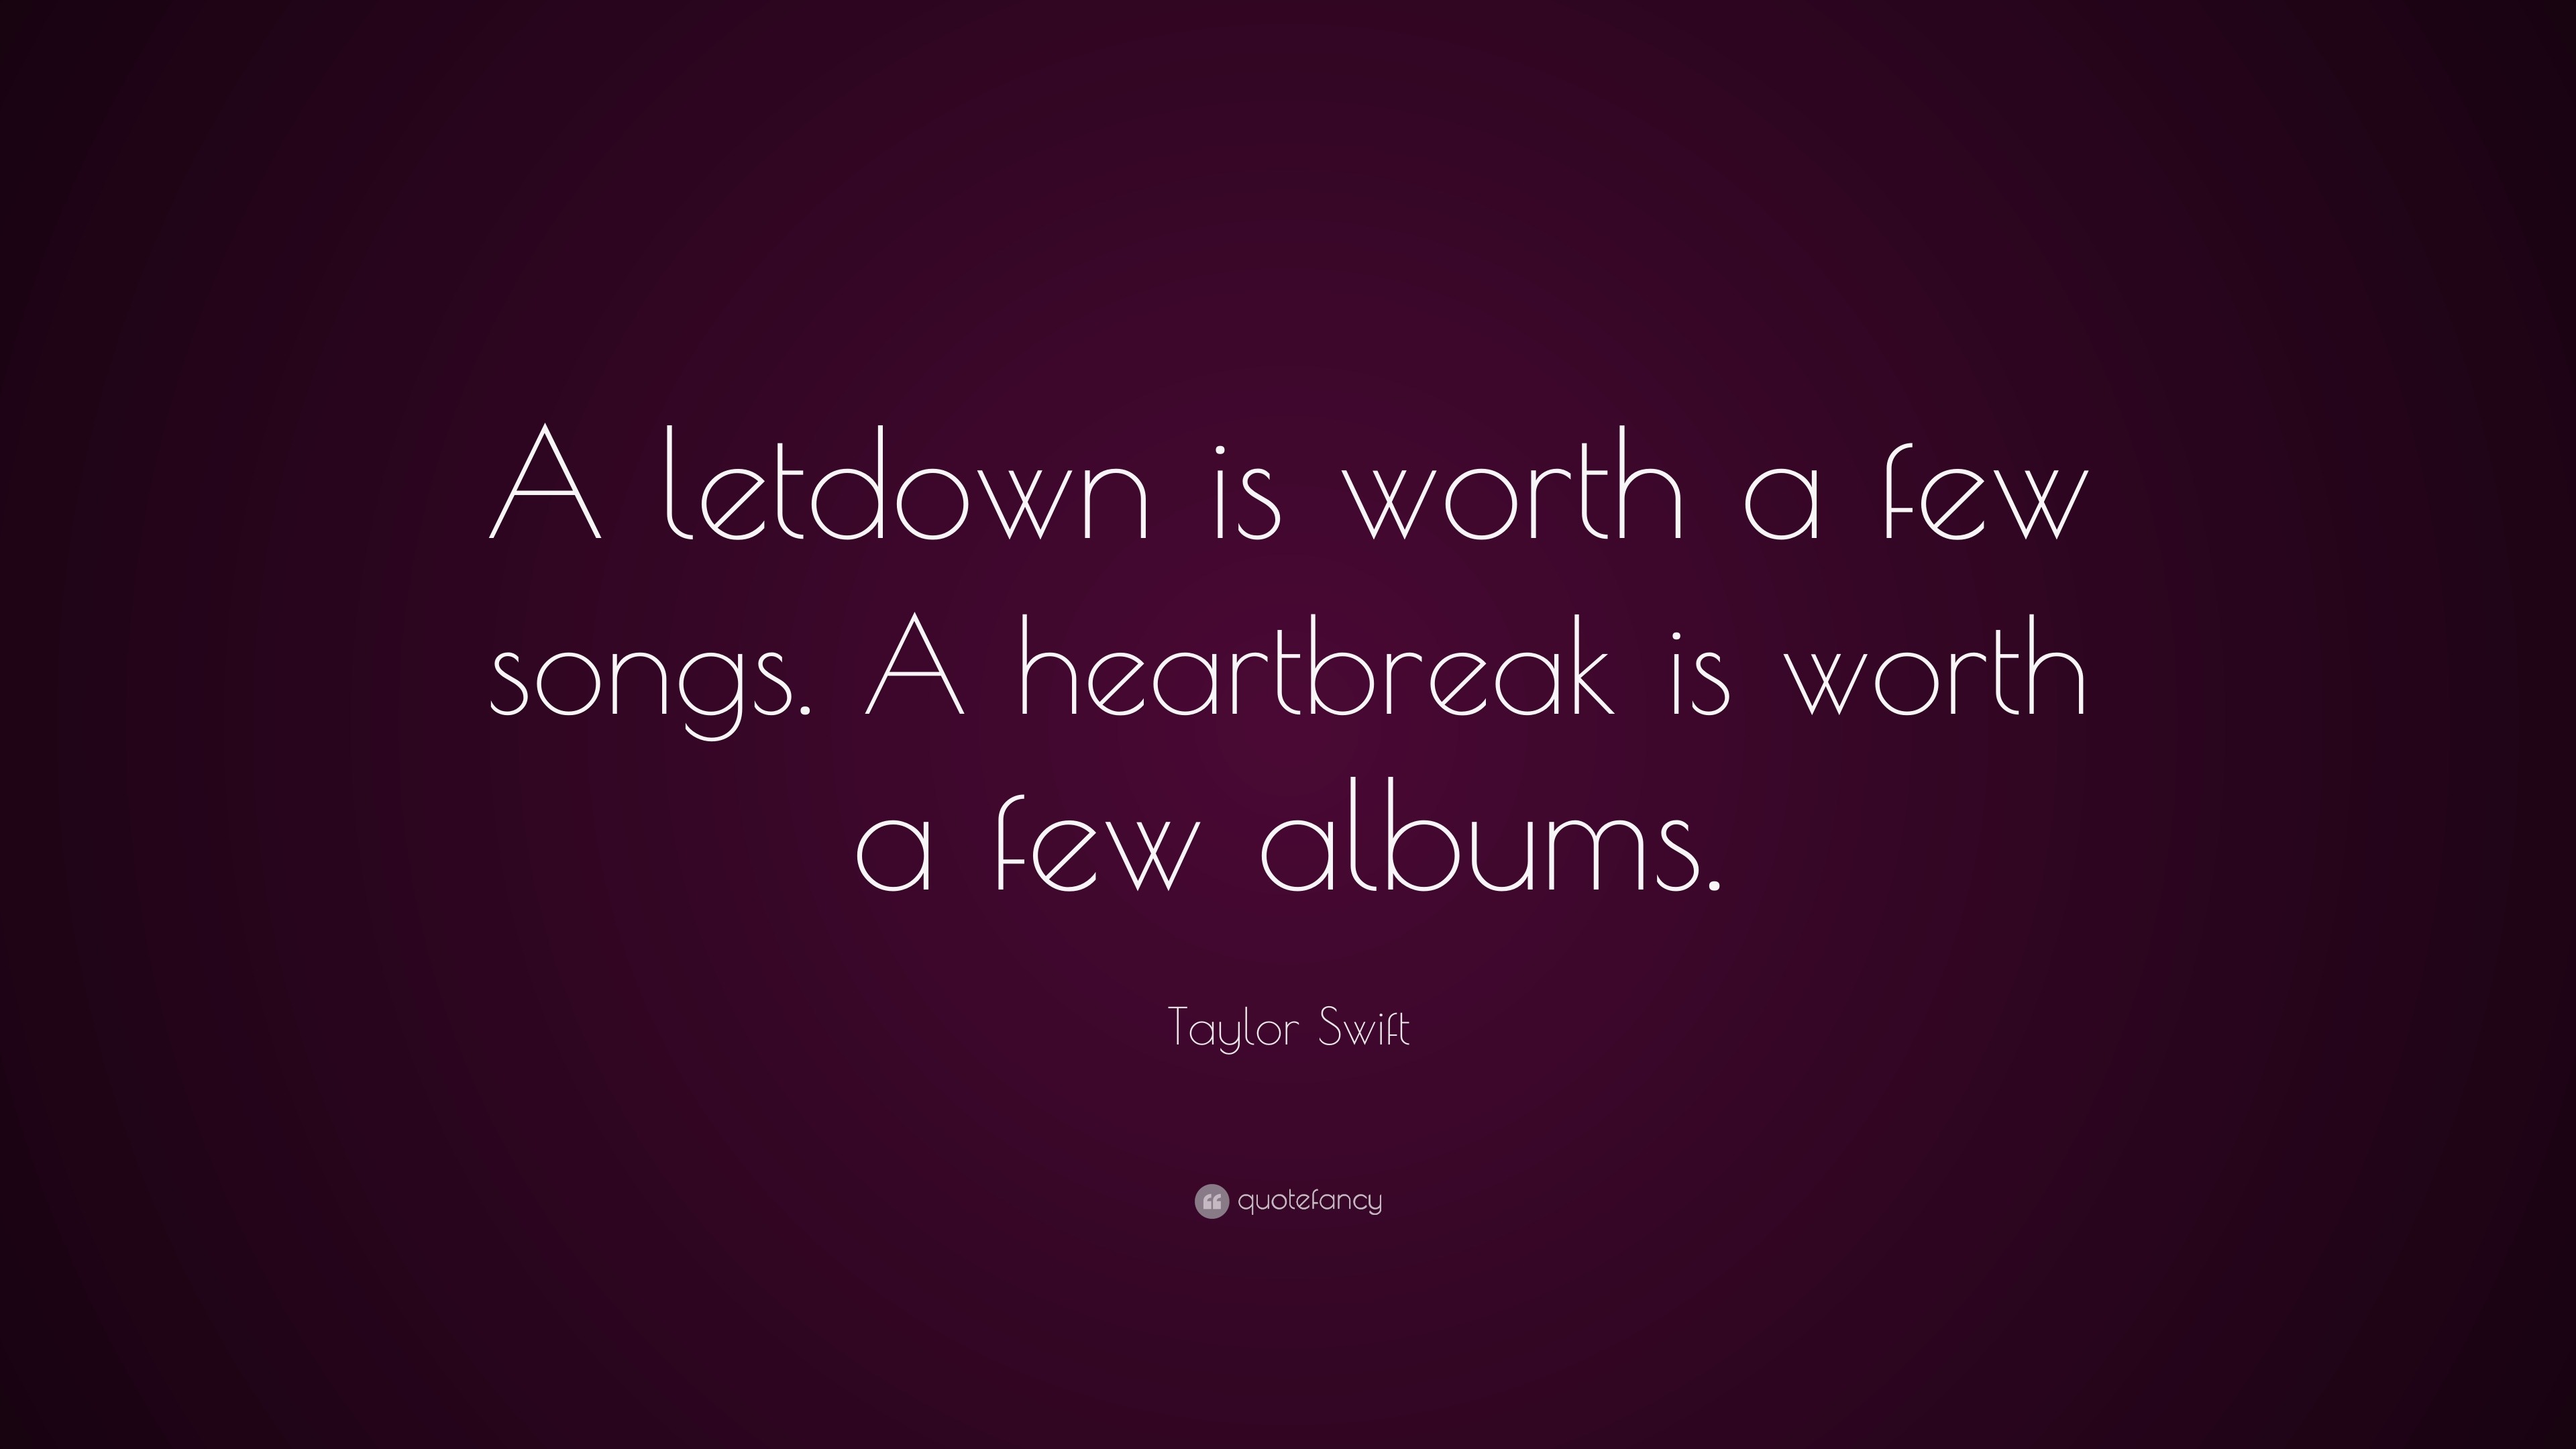 Taylor Swift Quote A letdown is worth a few songs A heartbreak is